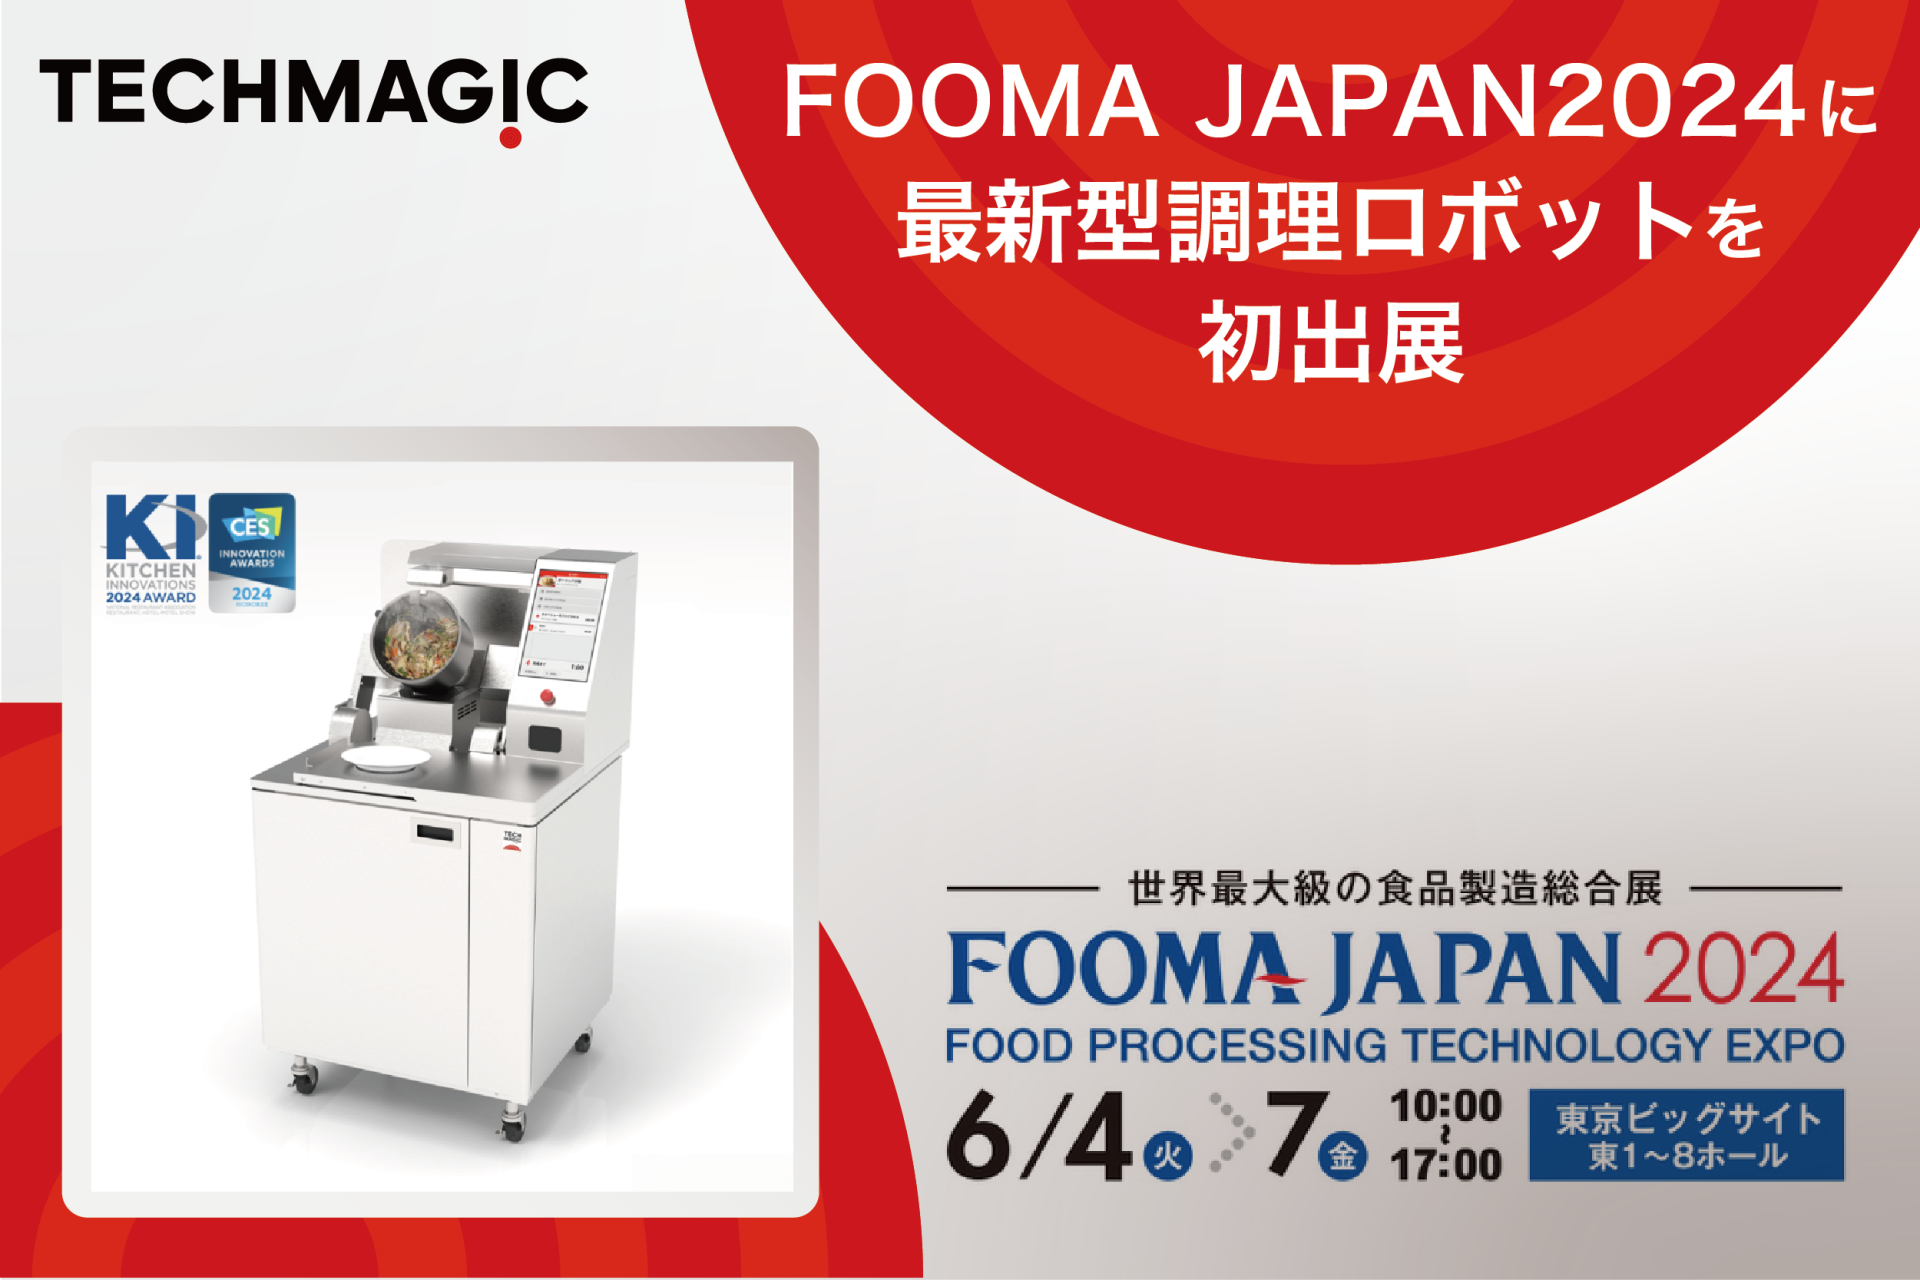 FOOMA JAPAN 2024に今夏発売予定のI-Robo2初出展およびセミナー登壇のお知らせ